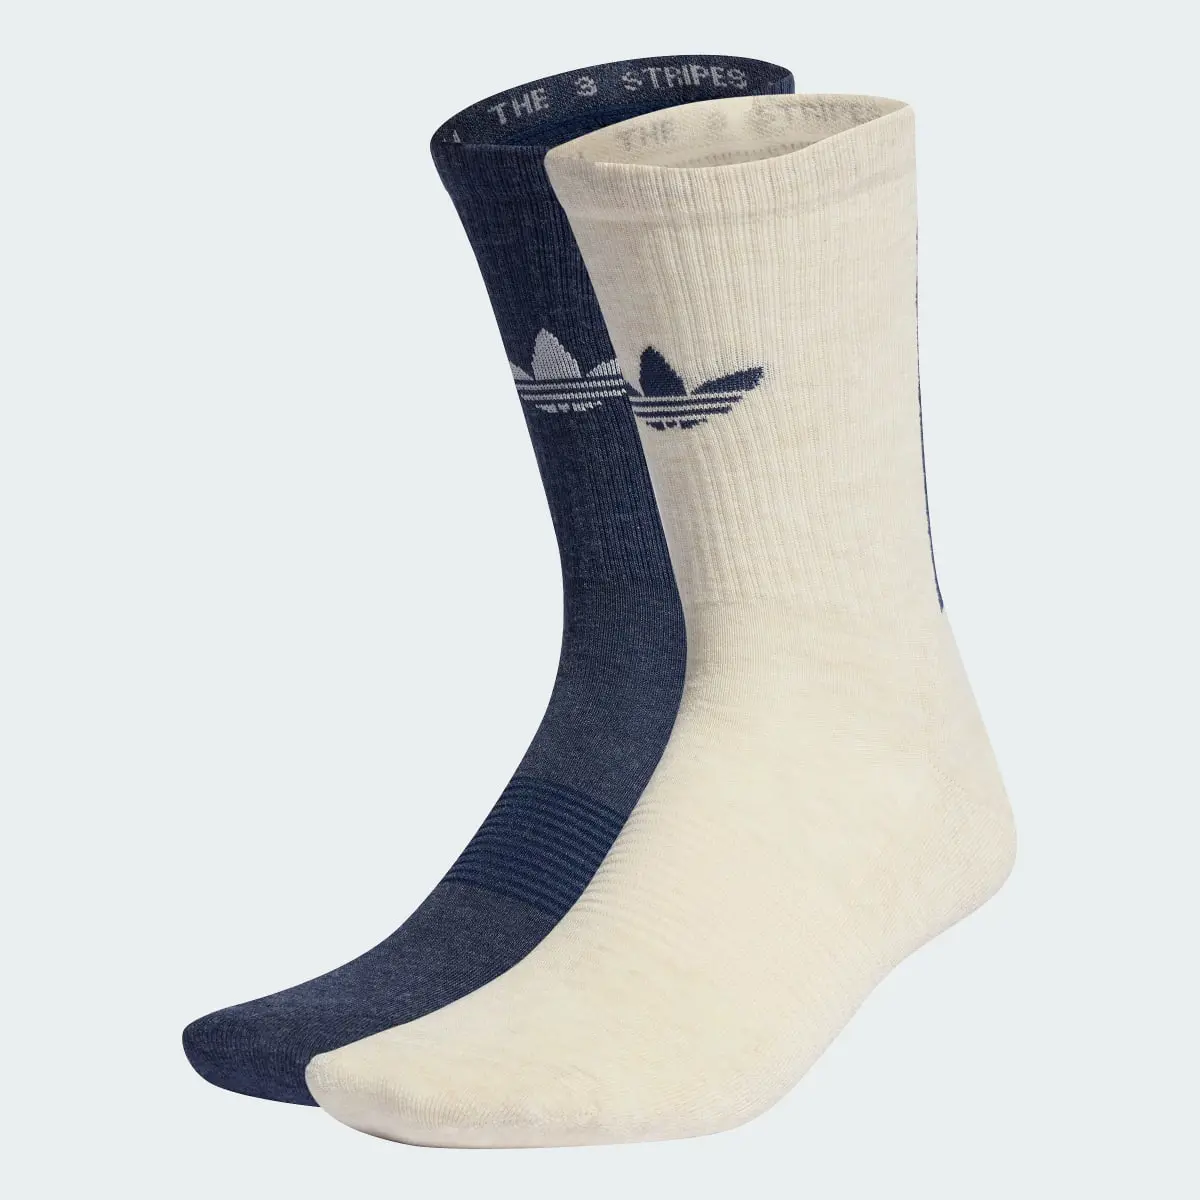 Adidas Trefoil Premium Crew Socken, 2 Paar. 1